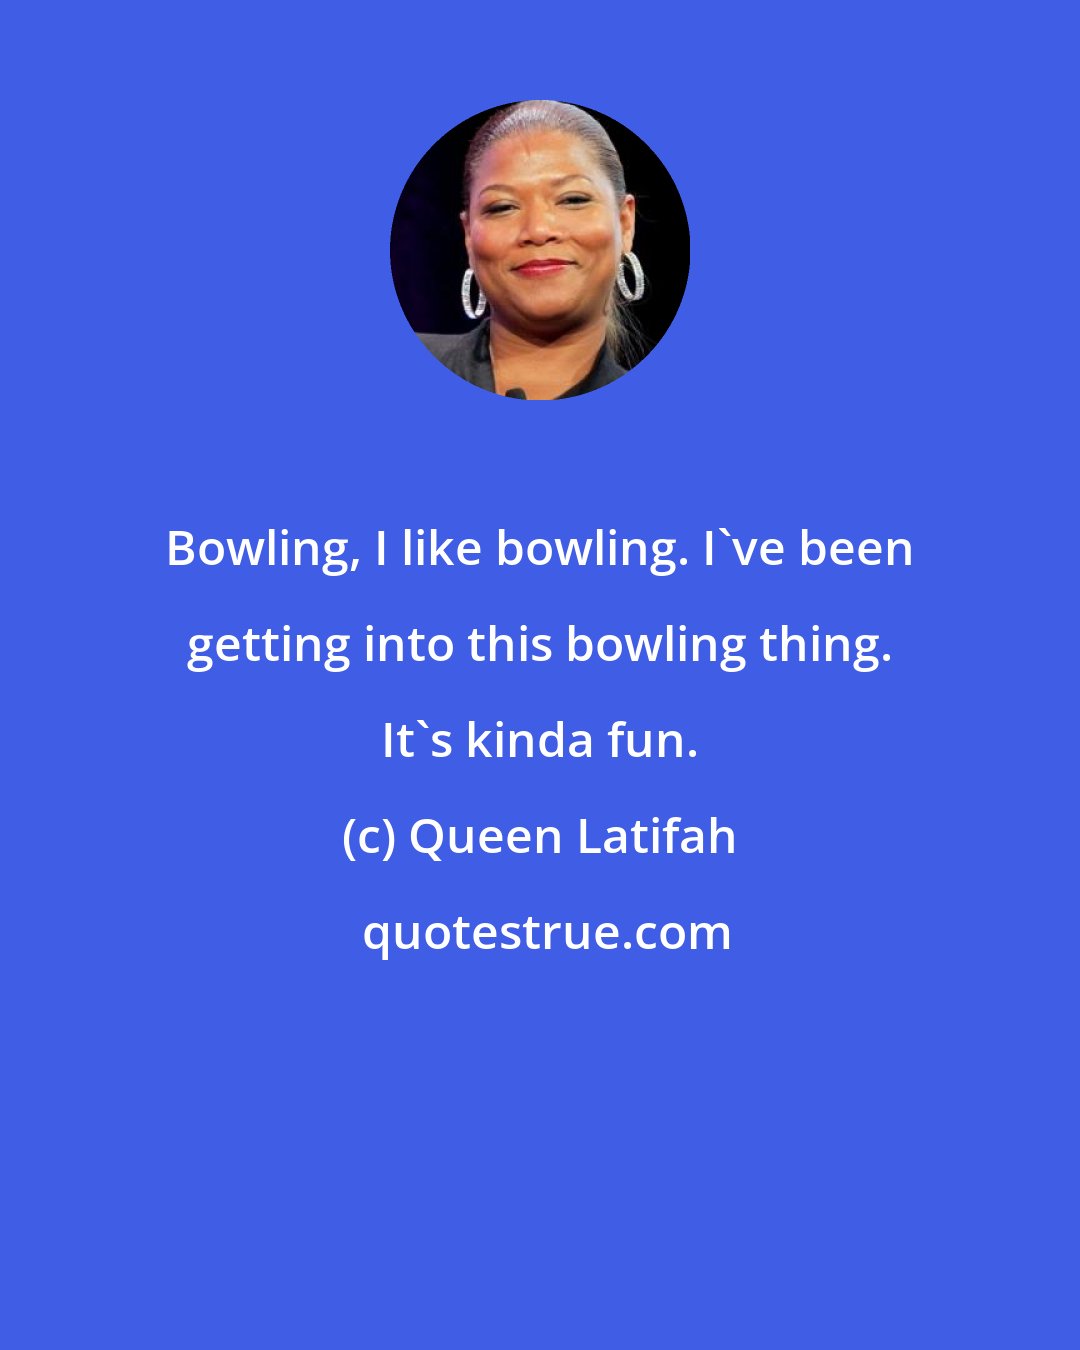 Queen Latifah: Bowling, I like bowling. I've been getting into this bowling thing. It's kinda fun.